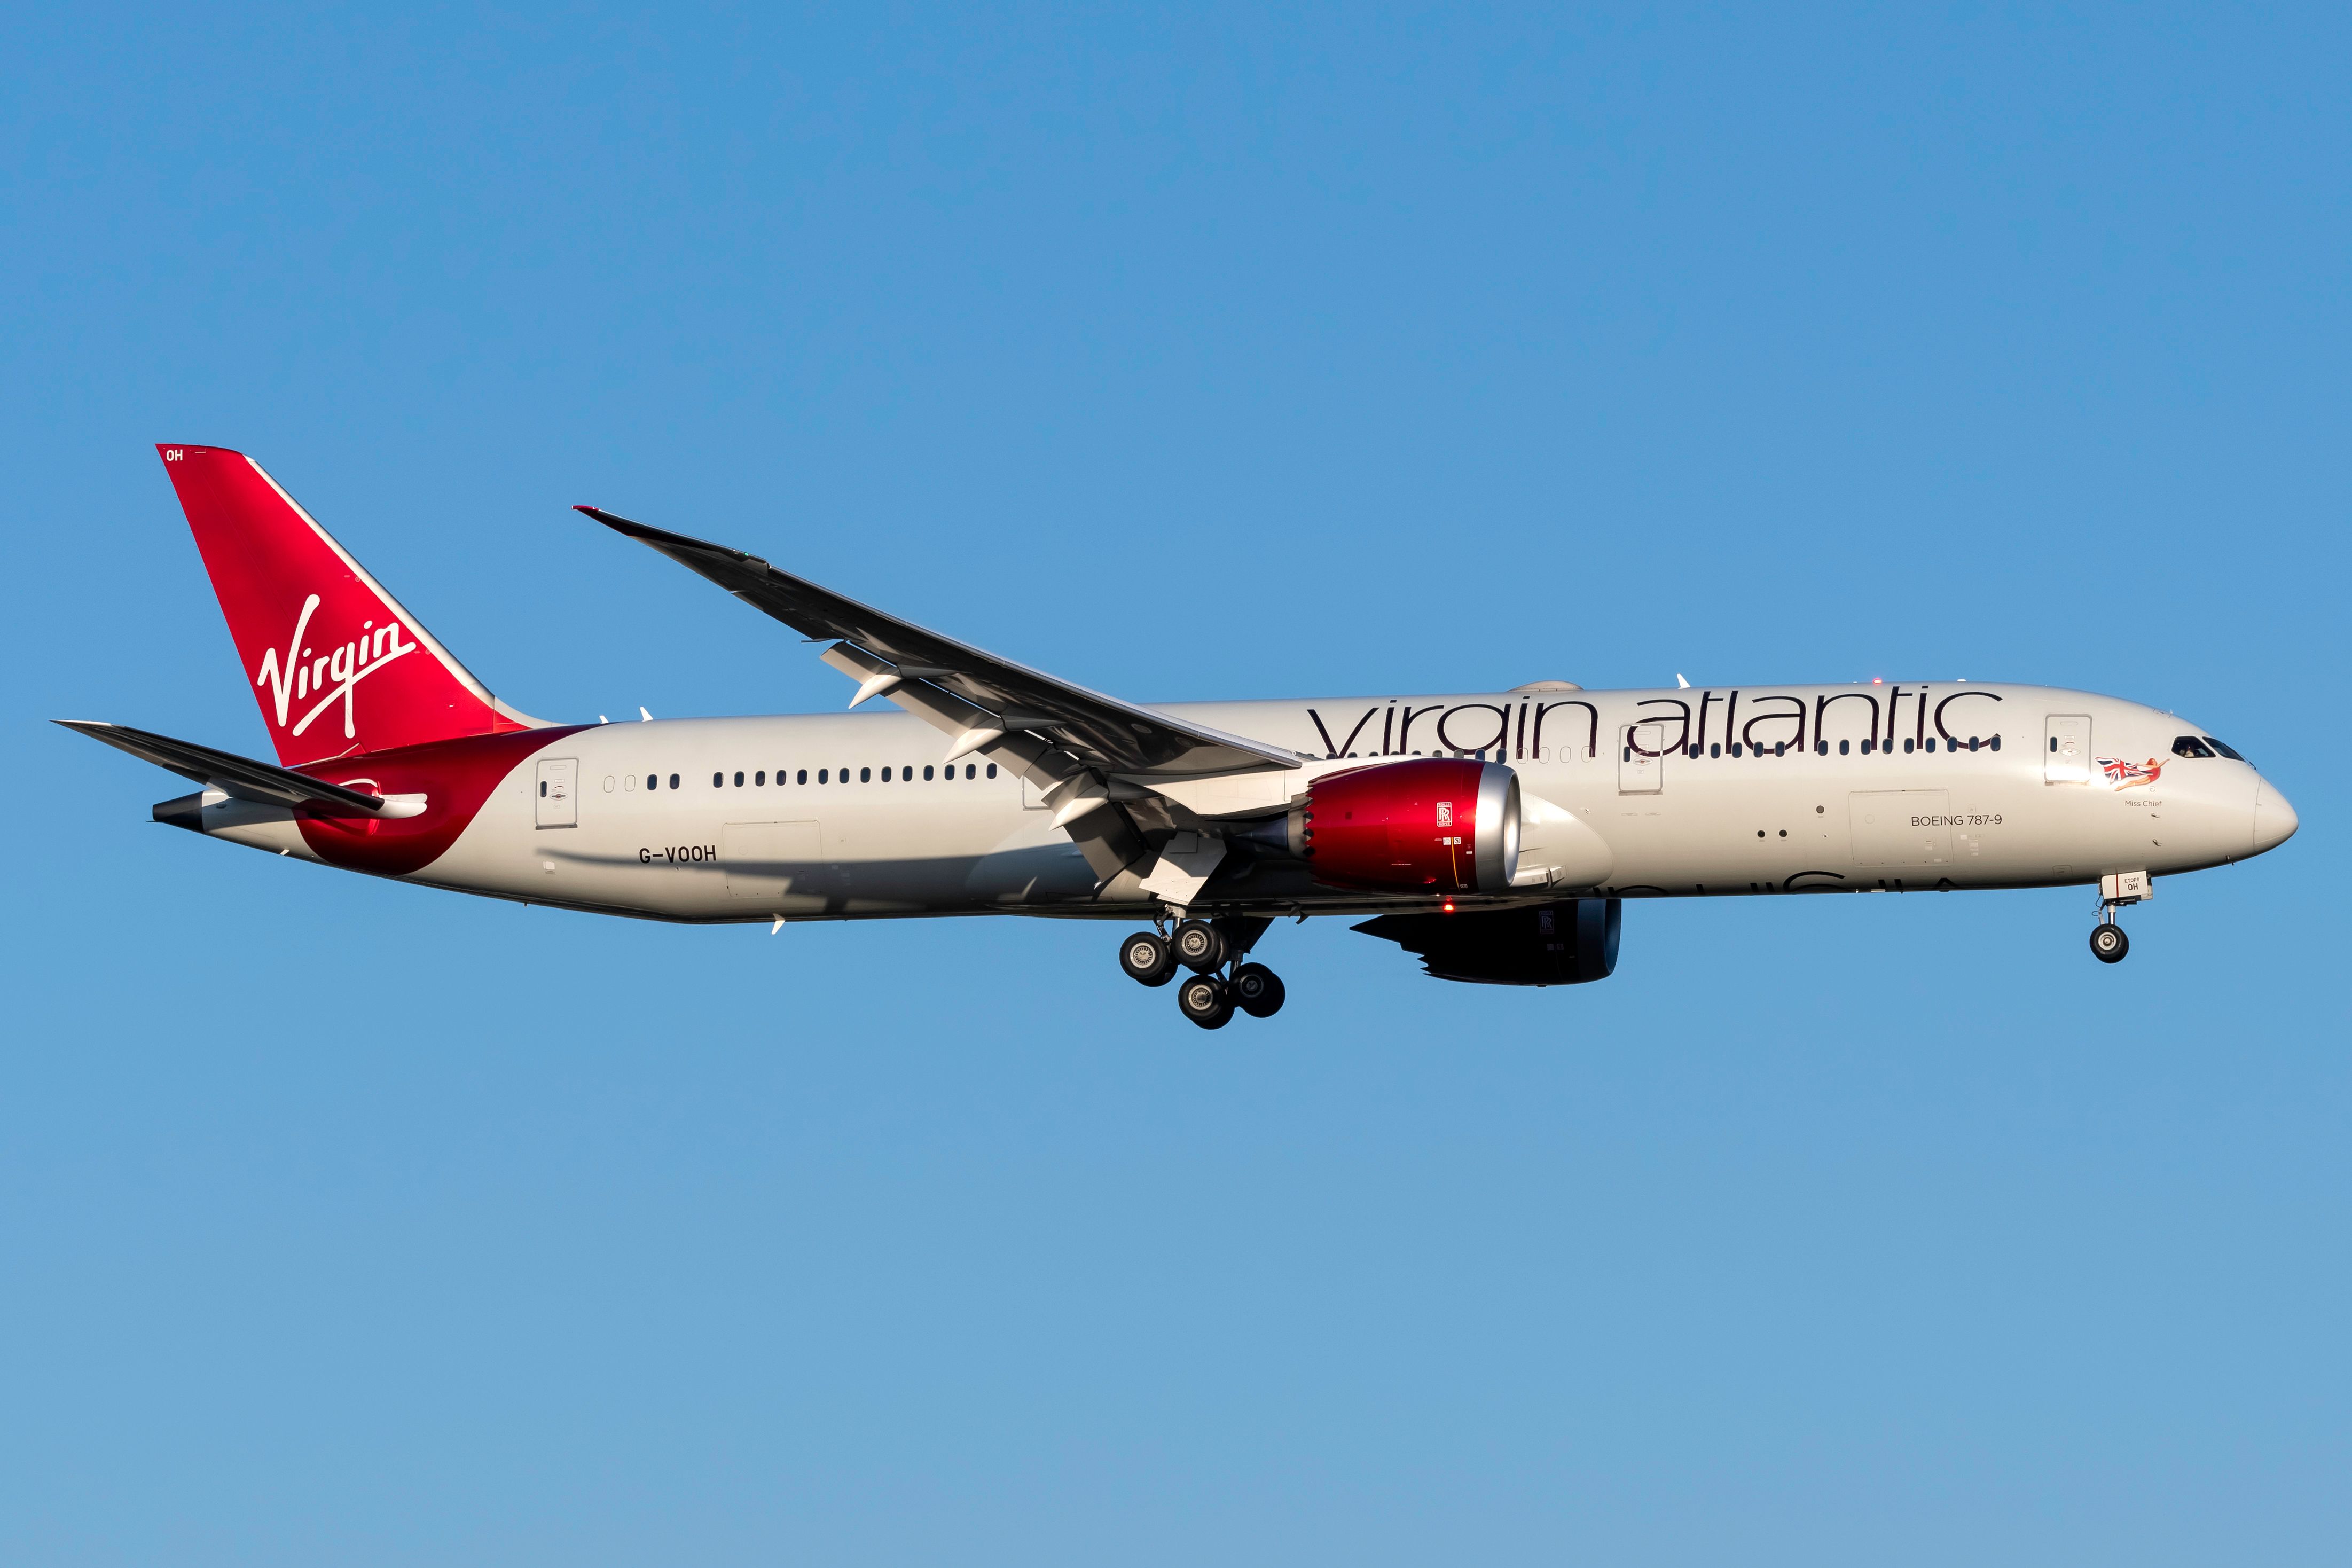 A Virgin Atlantic Boeing 787-9 Dreamliner flying in the sky.